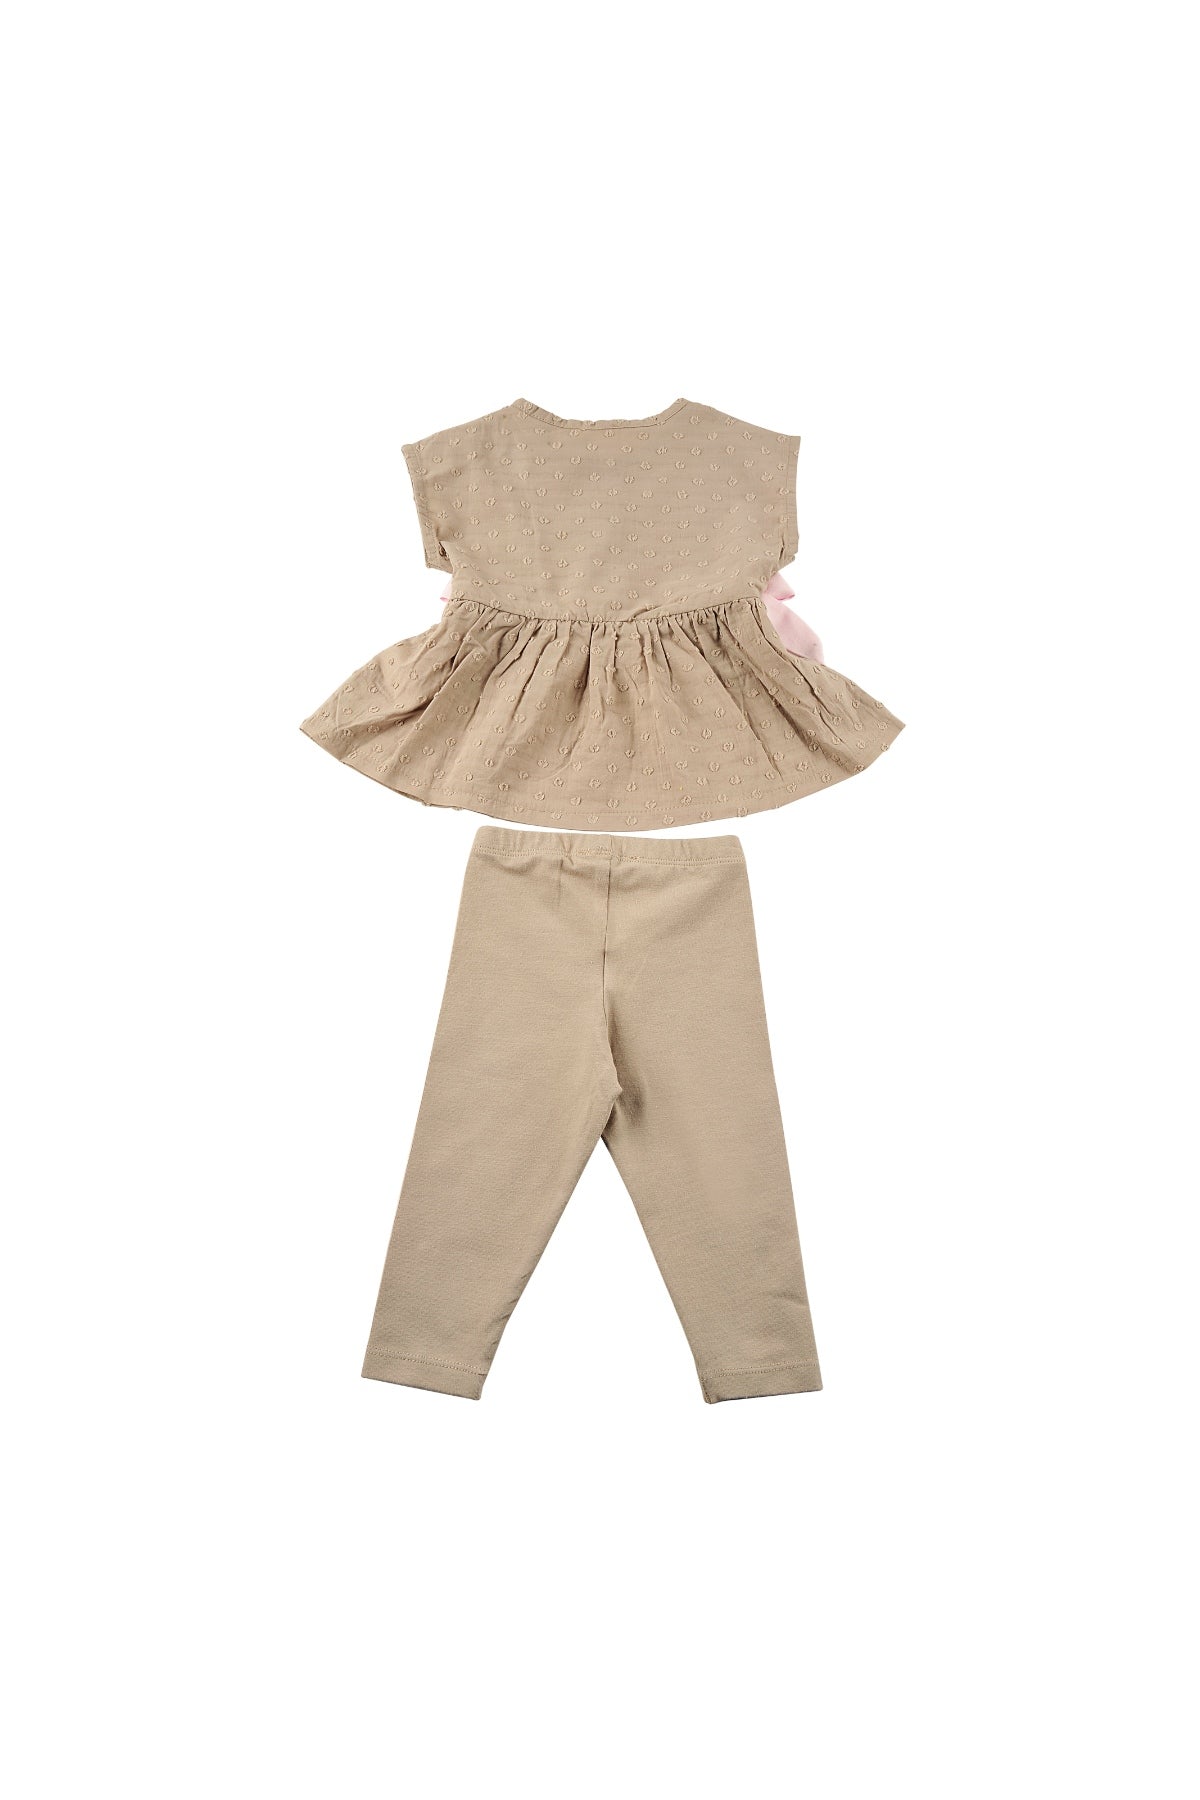 Kız Bebek Kahverengi Fisto Pembe Fiyonklu Bluz ve Tayt Takım (6ay-4yaş)-3